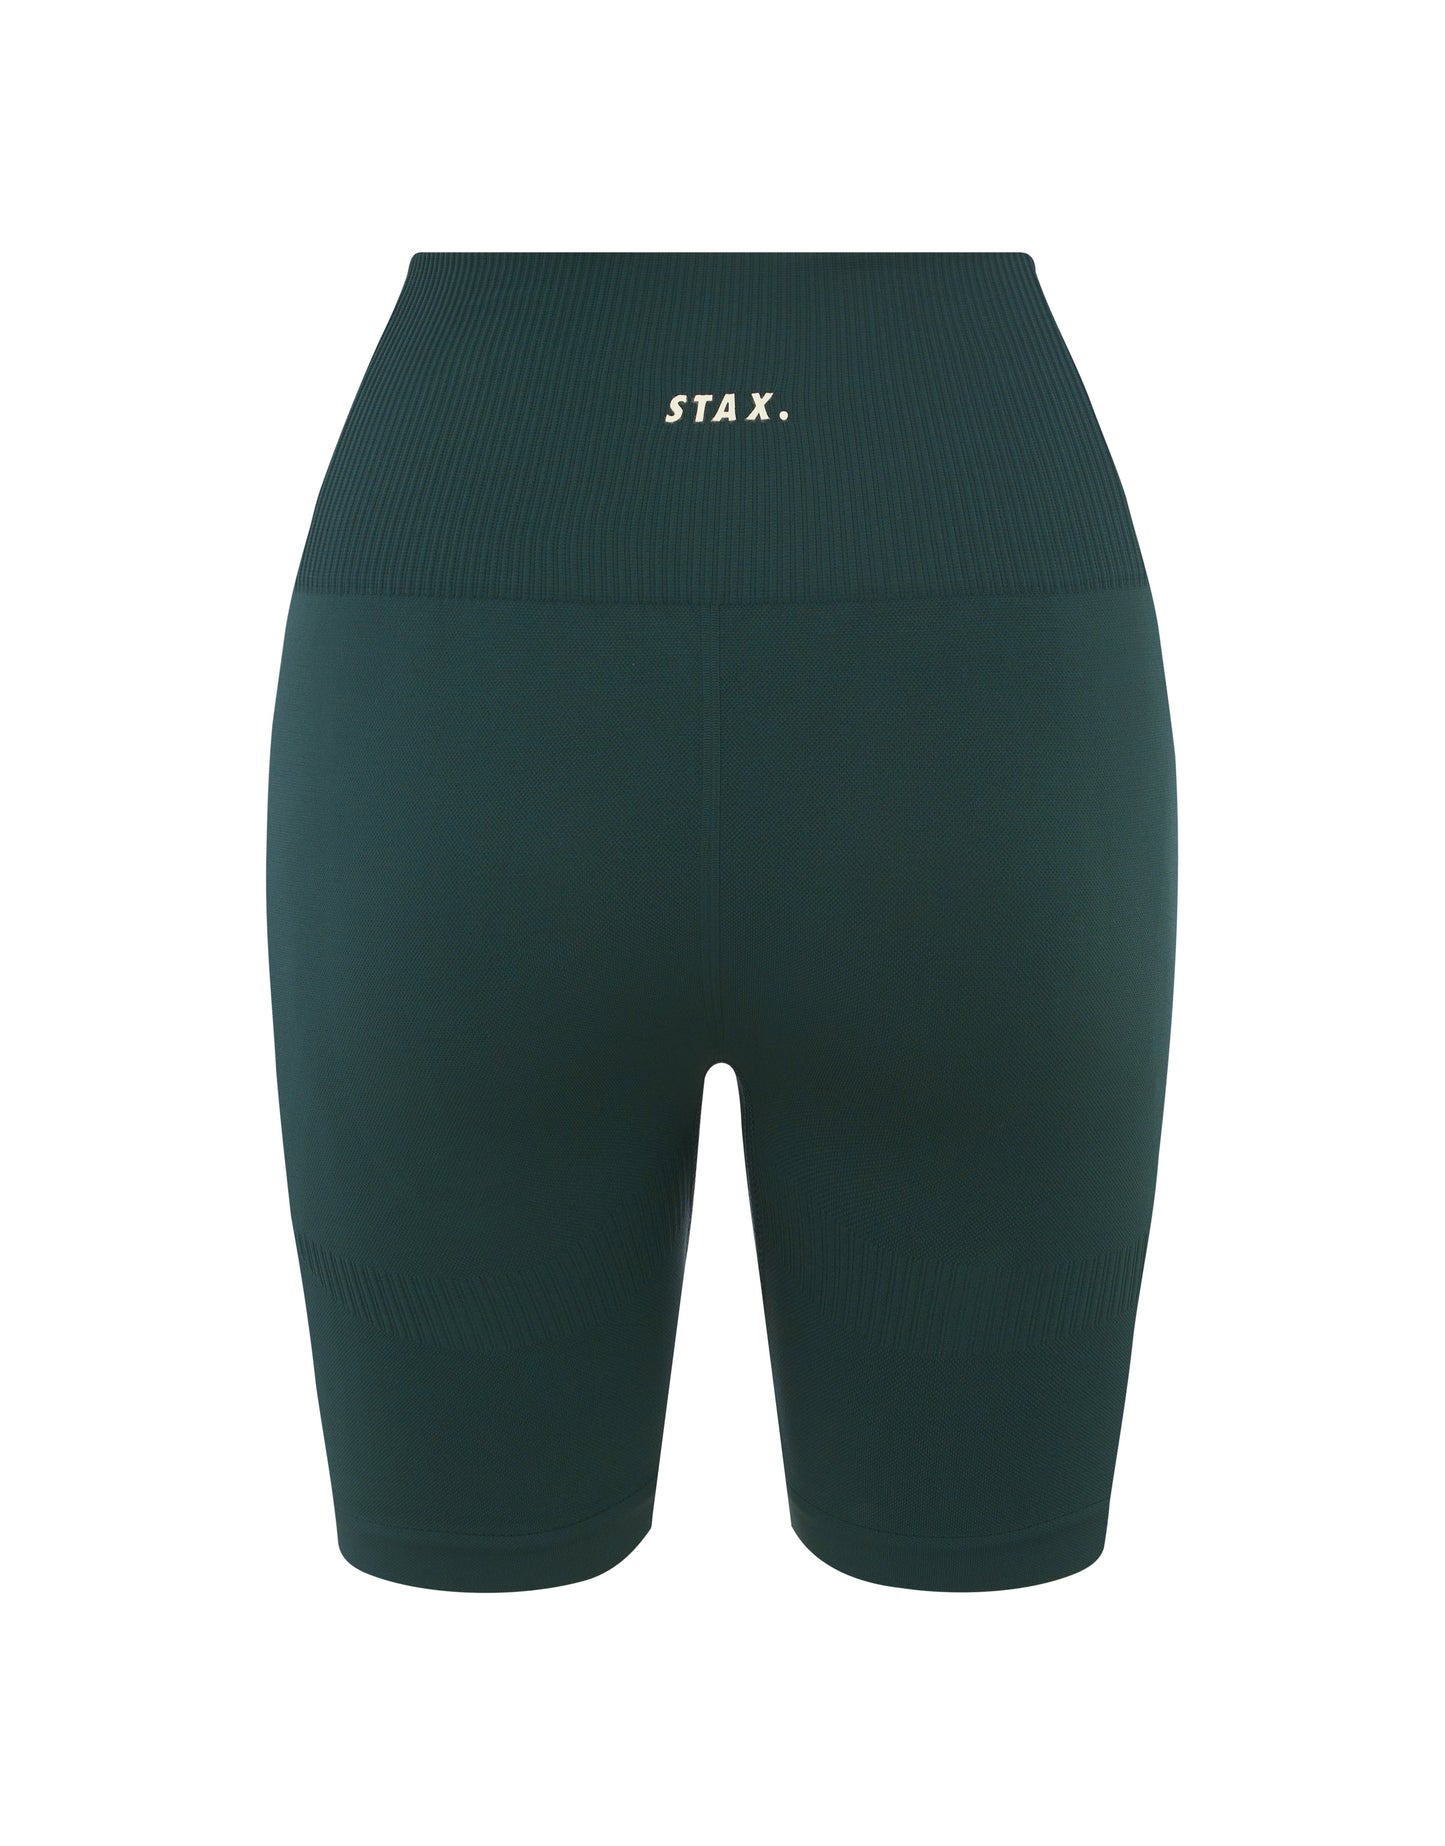 STAX. PSF Midi Bike Shorts - Pine